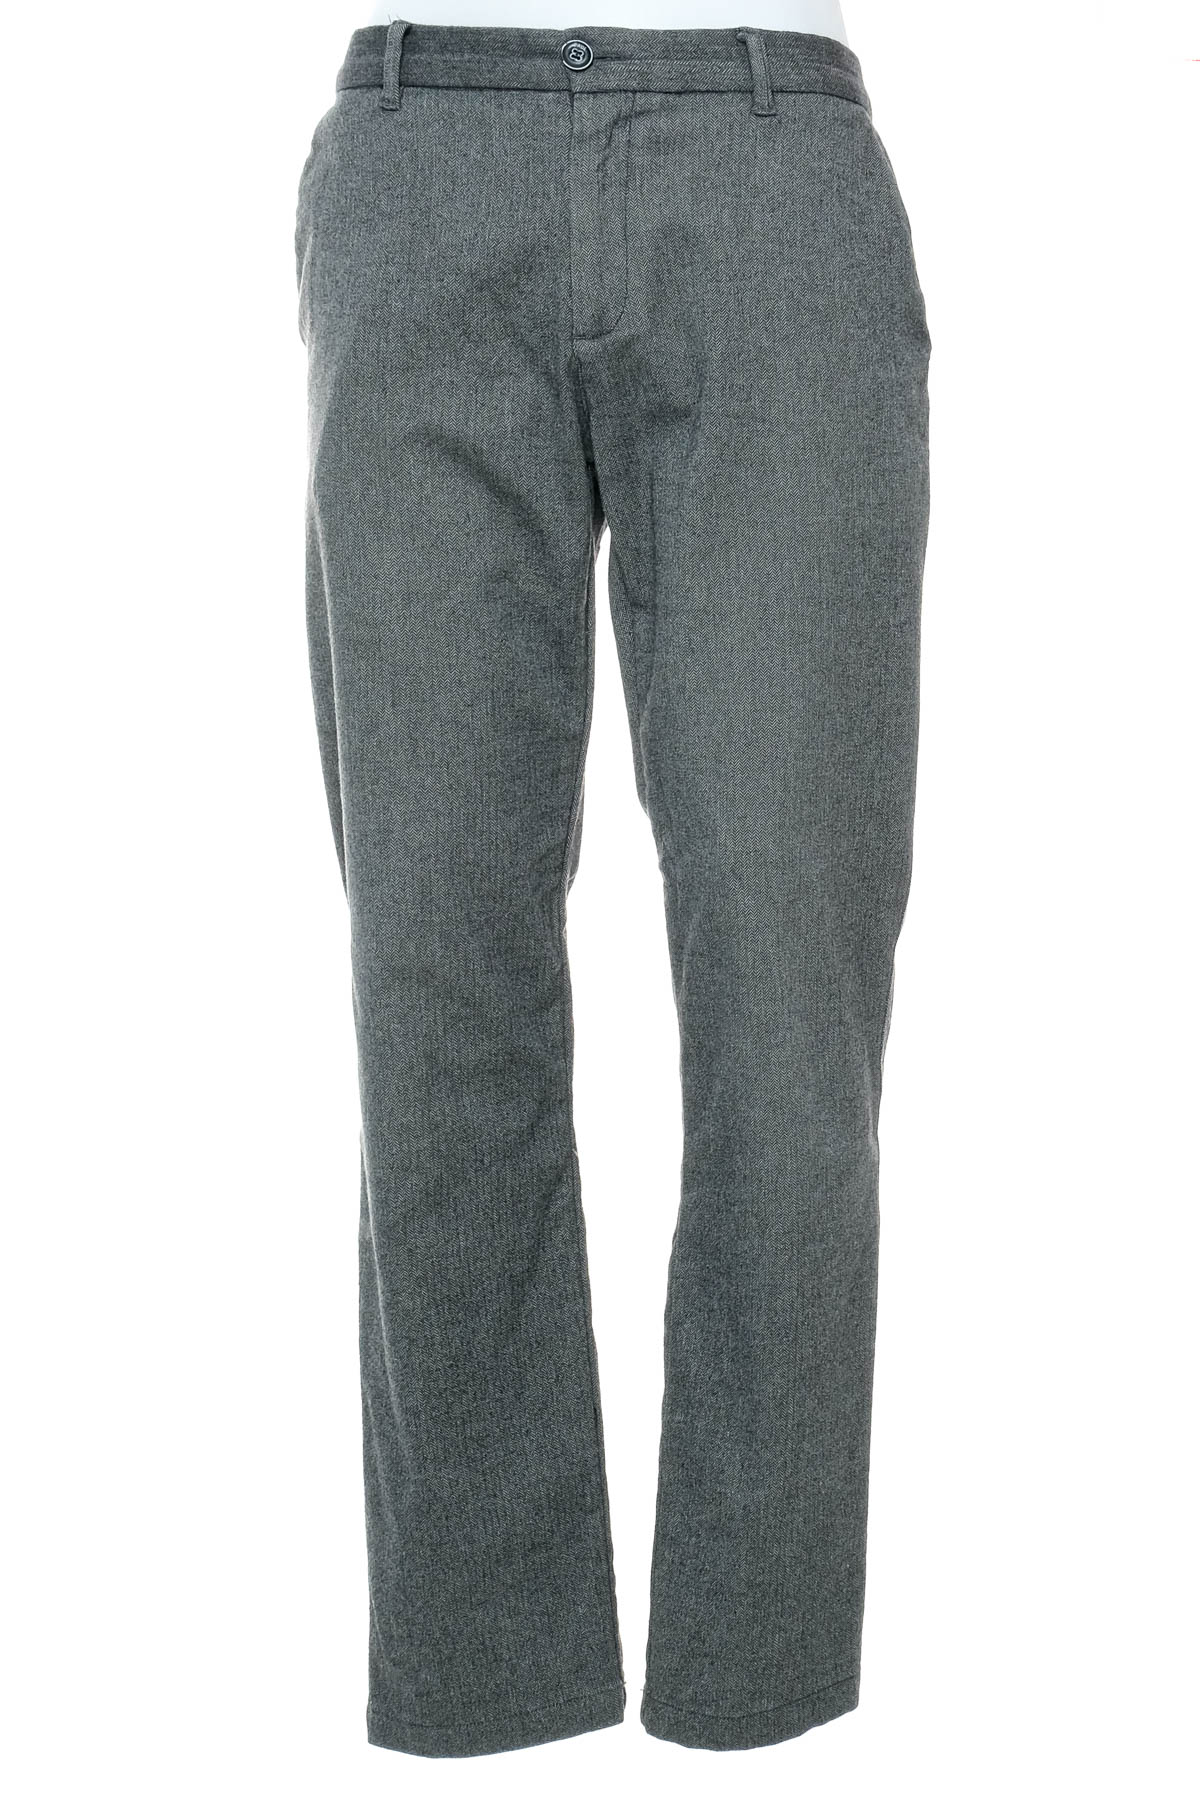 Men's trousers - Paul - 0